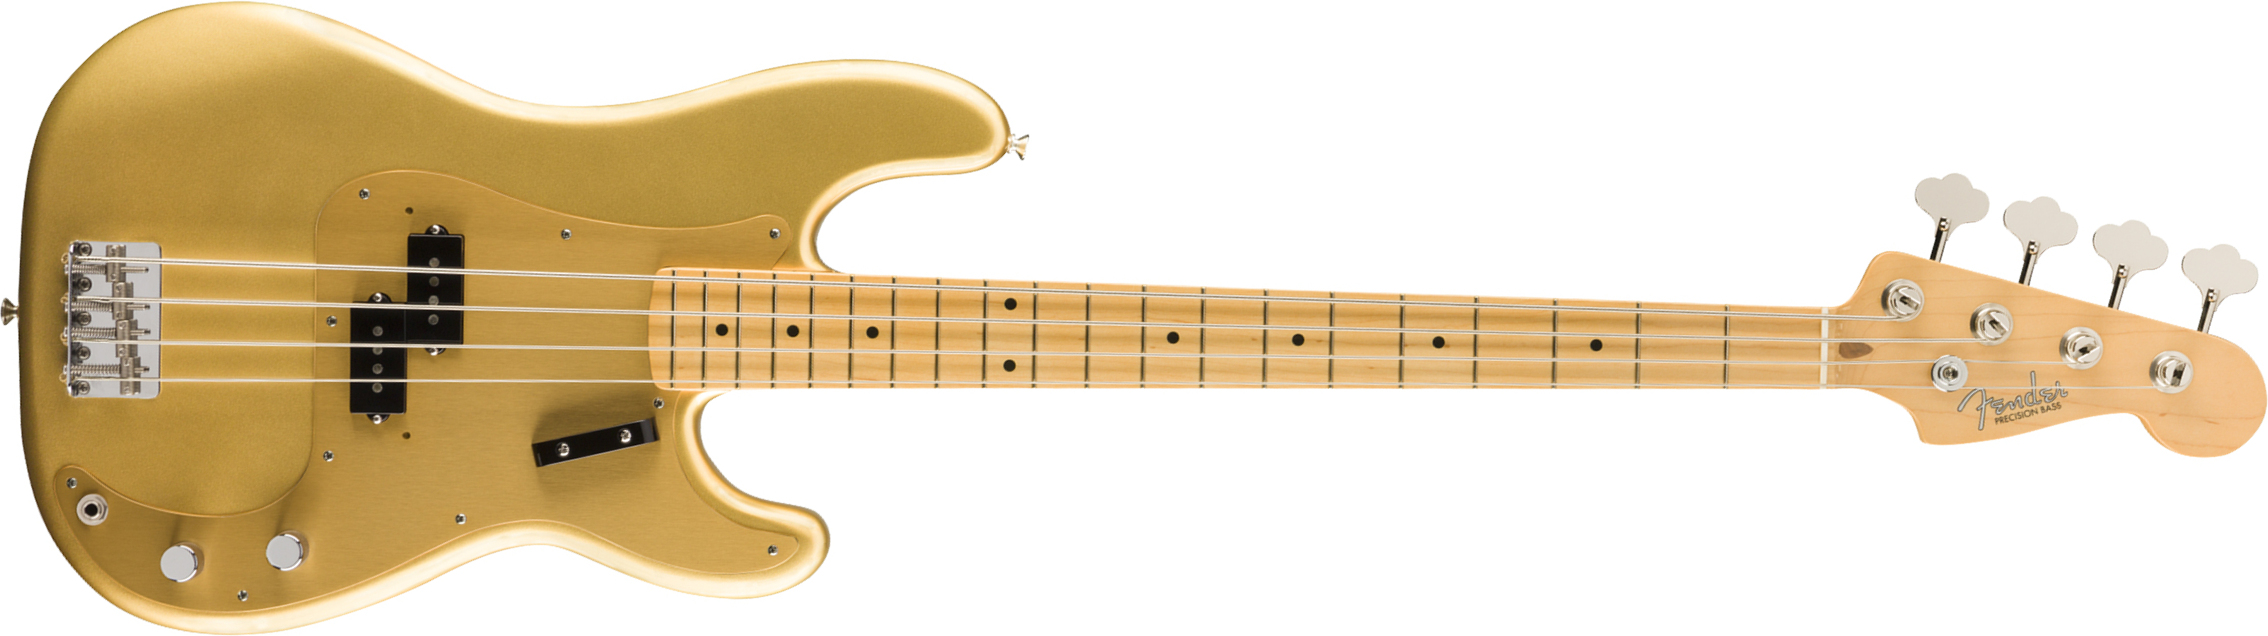 Fender Precision Bass '50s American Original Usa Mn - Aztec Gold - Basse Électrique Solid Body - Main picture